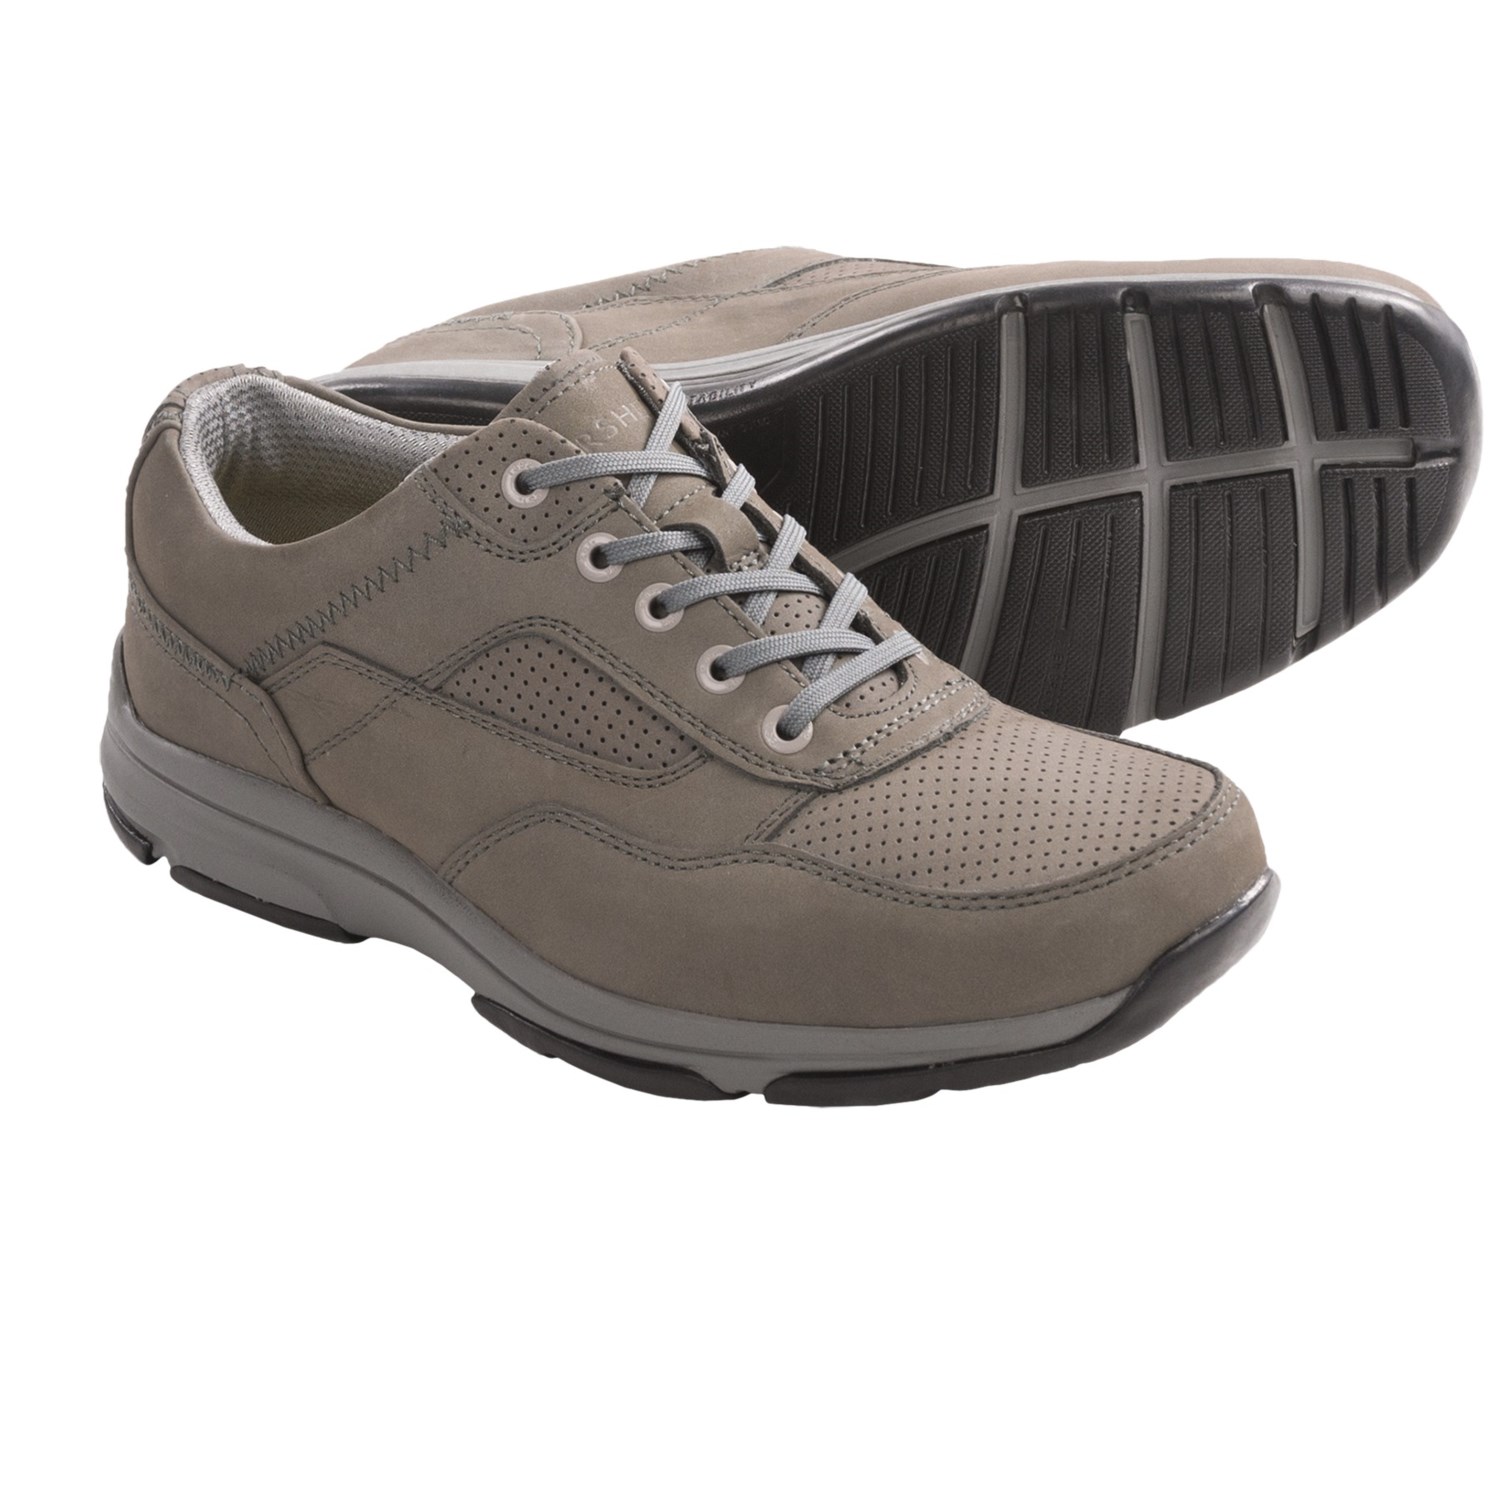 Florsheim Electric Shoes (For Men) 7096A - Save 74%